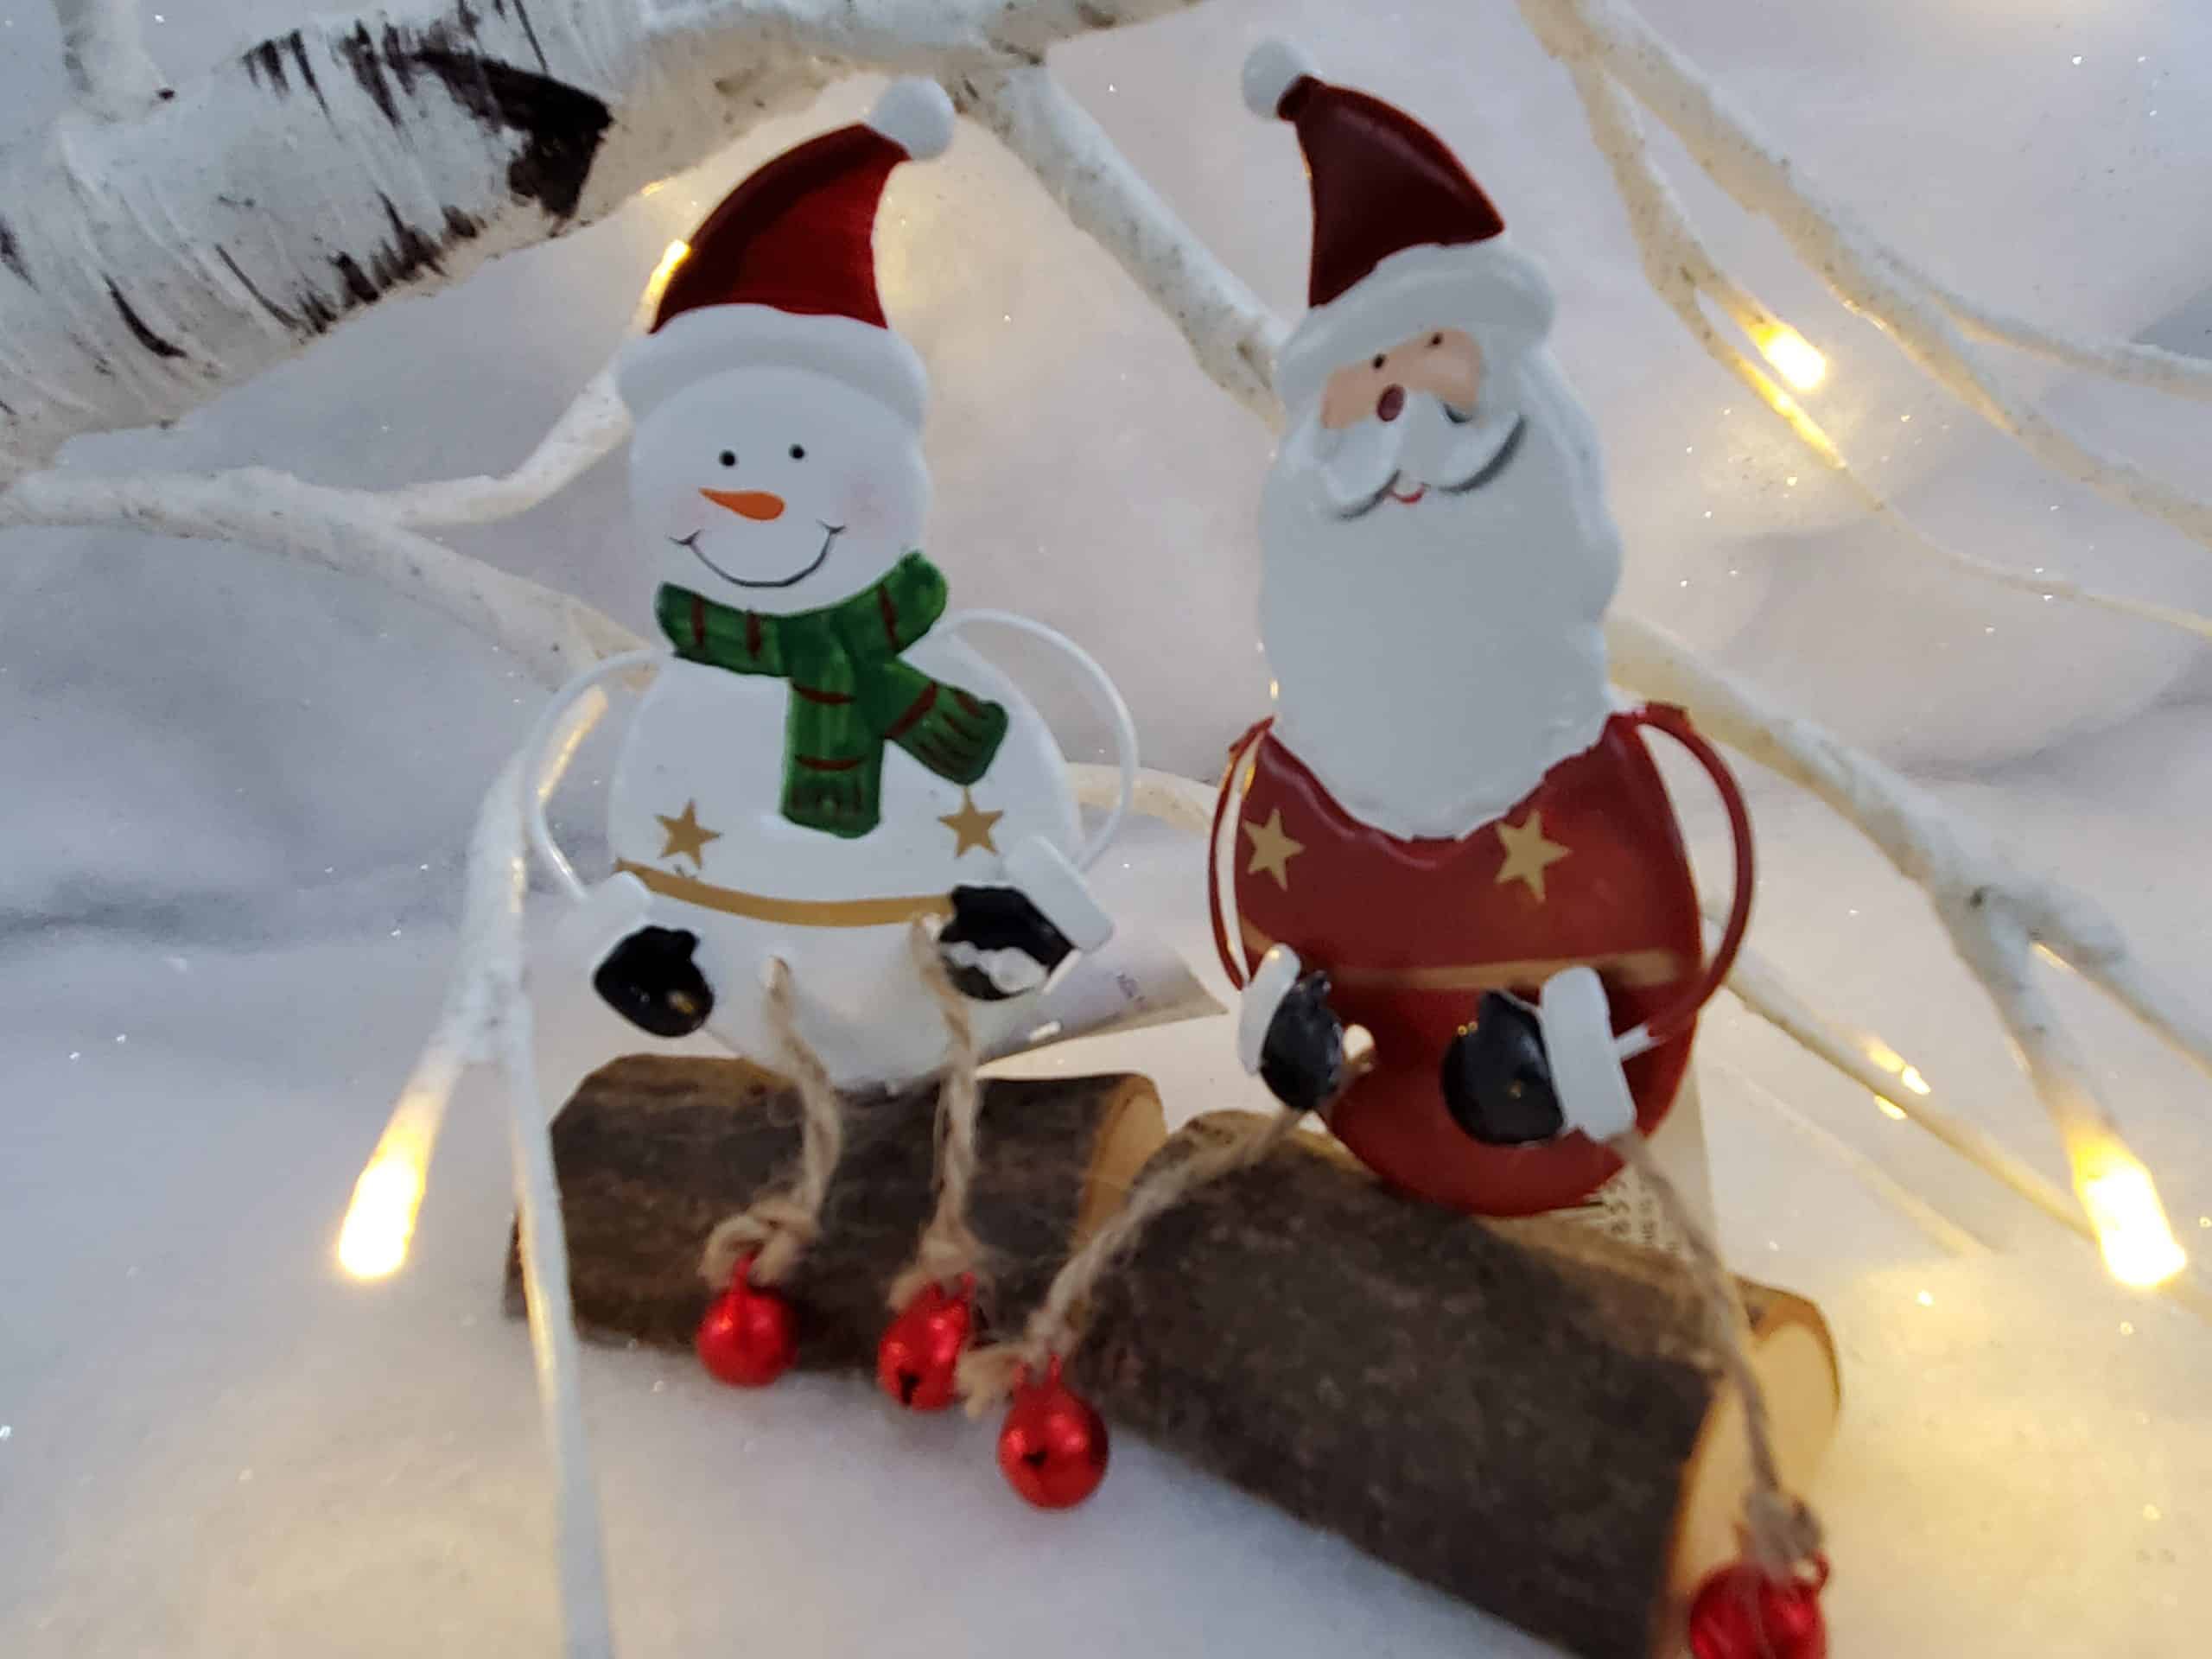 Santa and Snowman sitting on a log